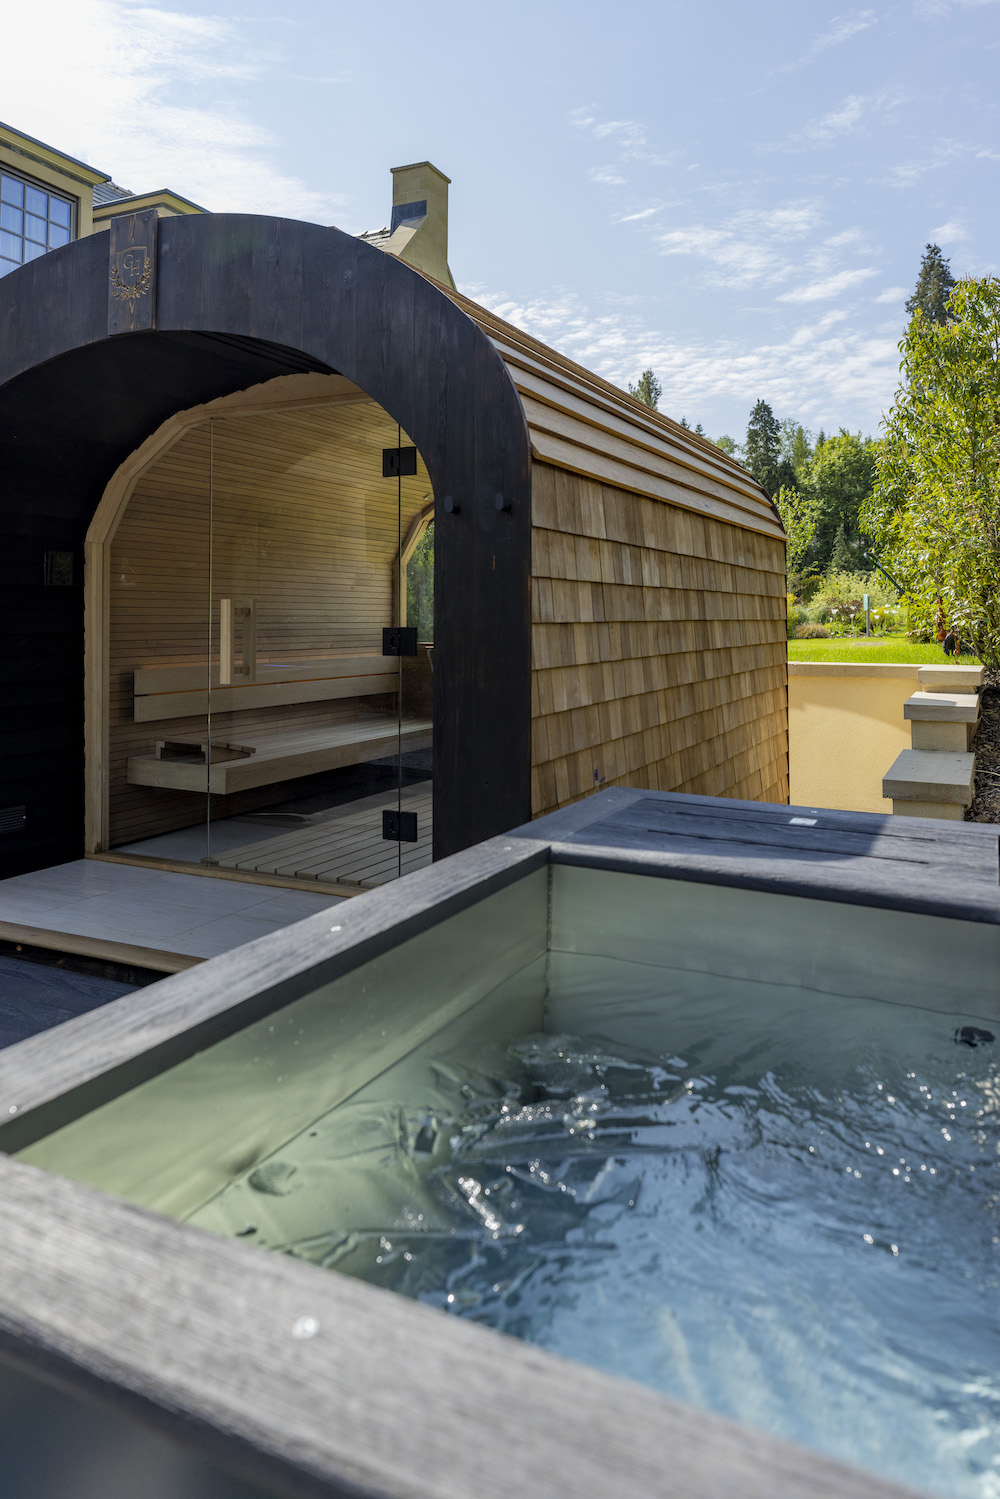 Outdoor sauna and ice bath